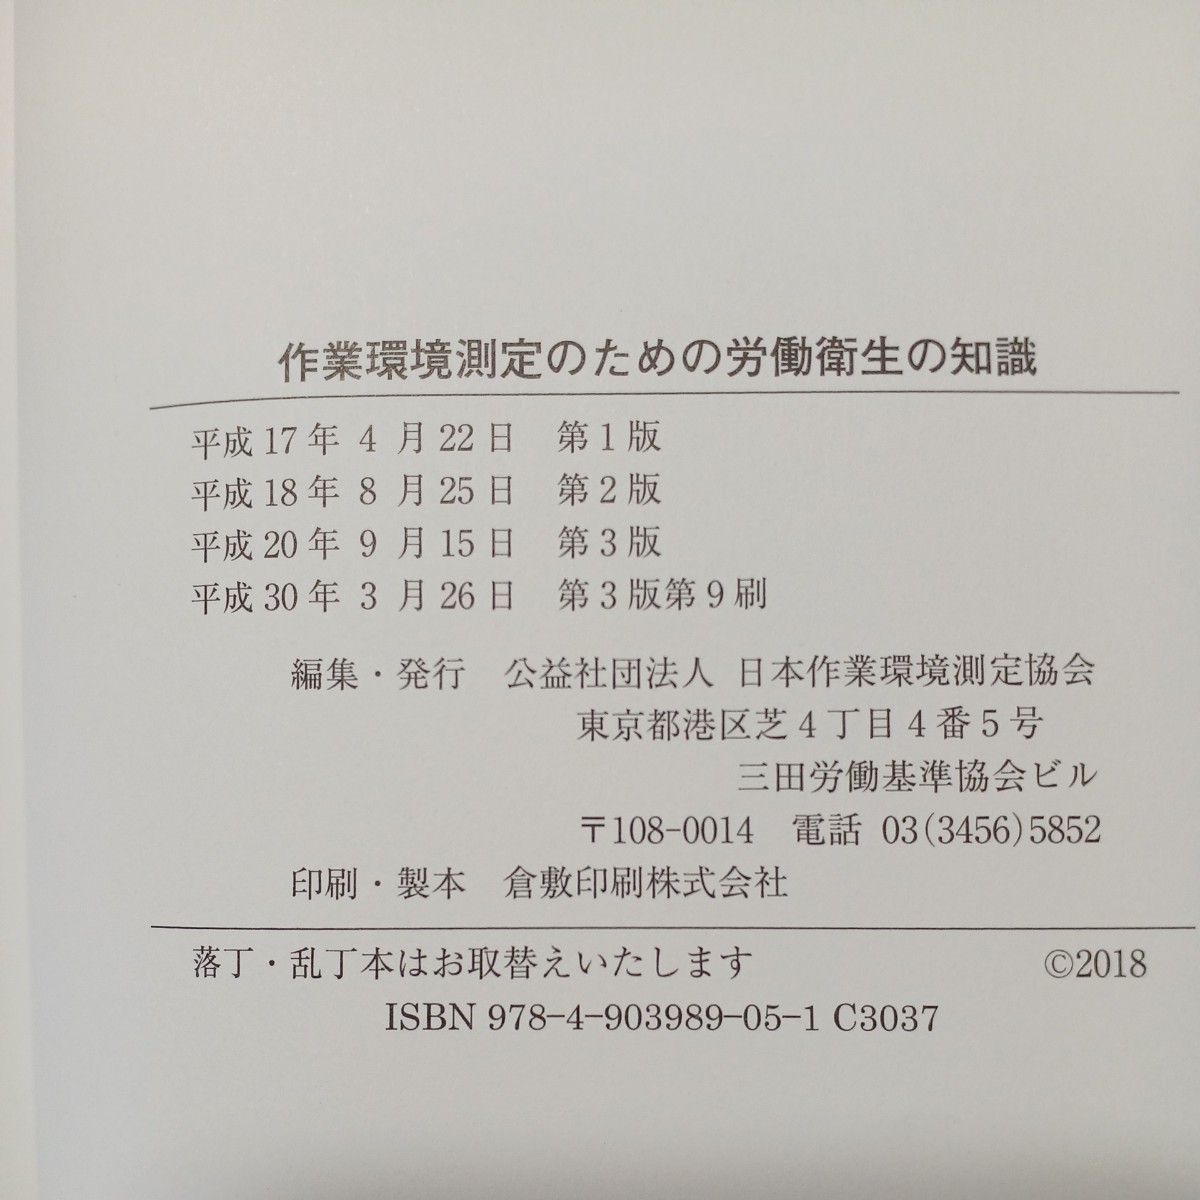 zaa-508♪作業環境測定のための労働衛生の知識 （新訂第２版） 日本作業環境測定協会 日本作業環境測定協会（2006/08発売）